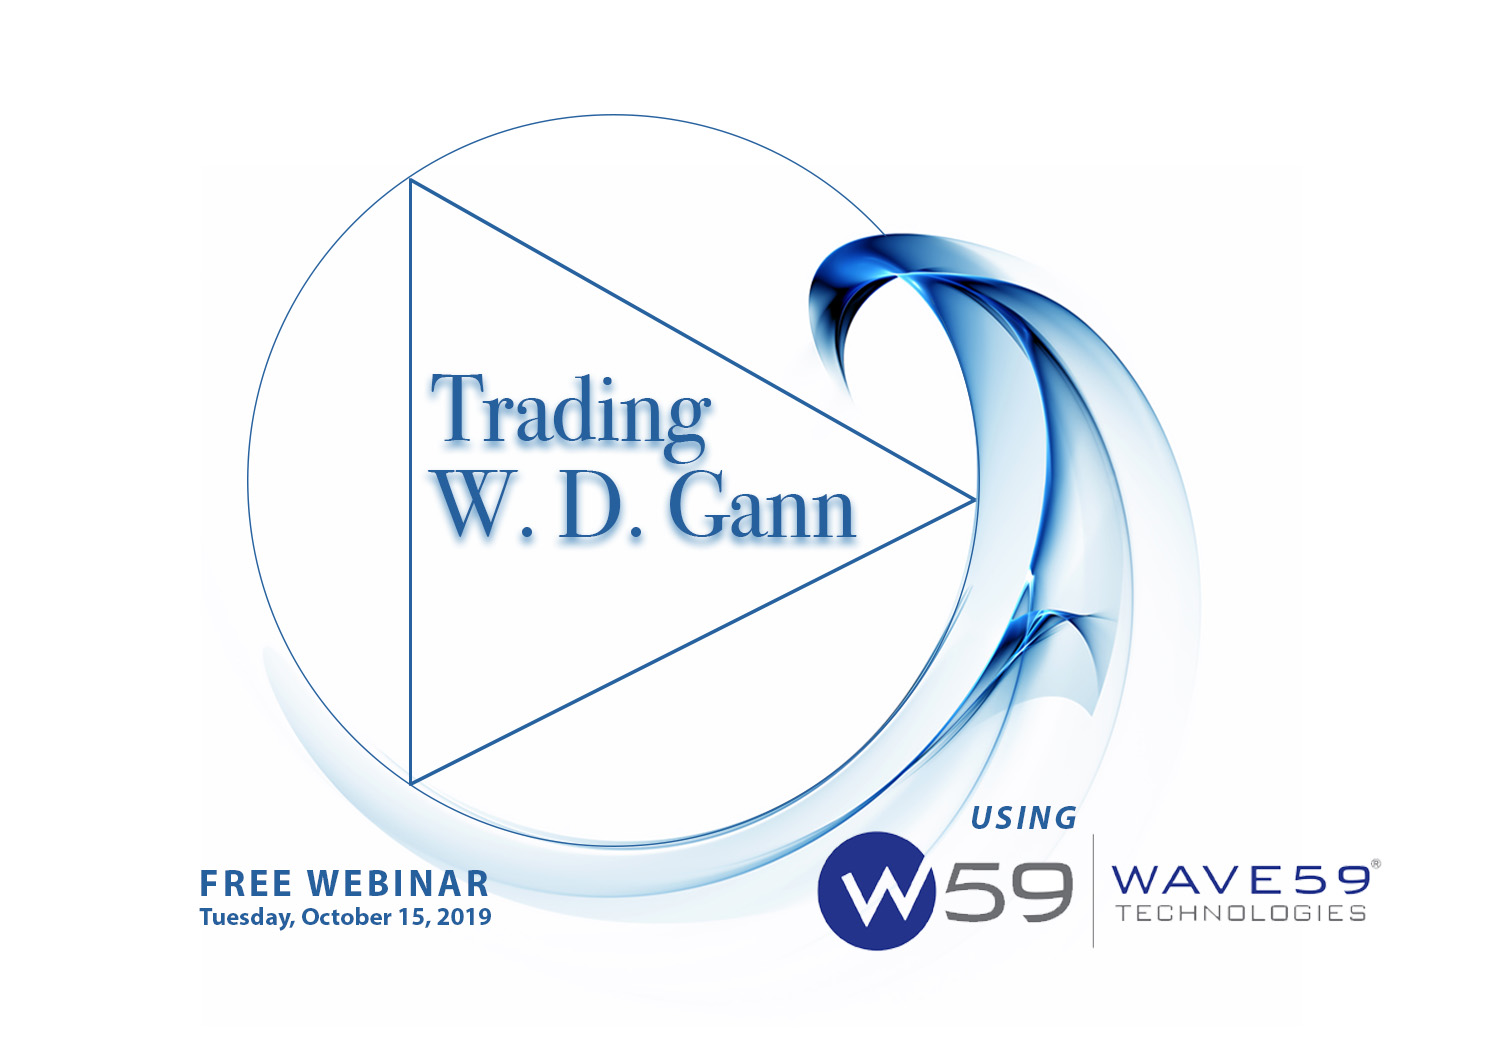 Wave59_trading_W. D. Gann.jpg